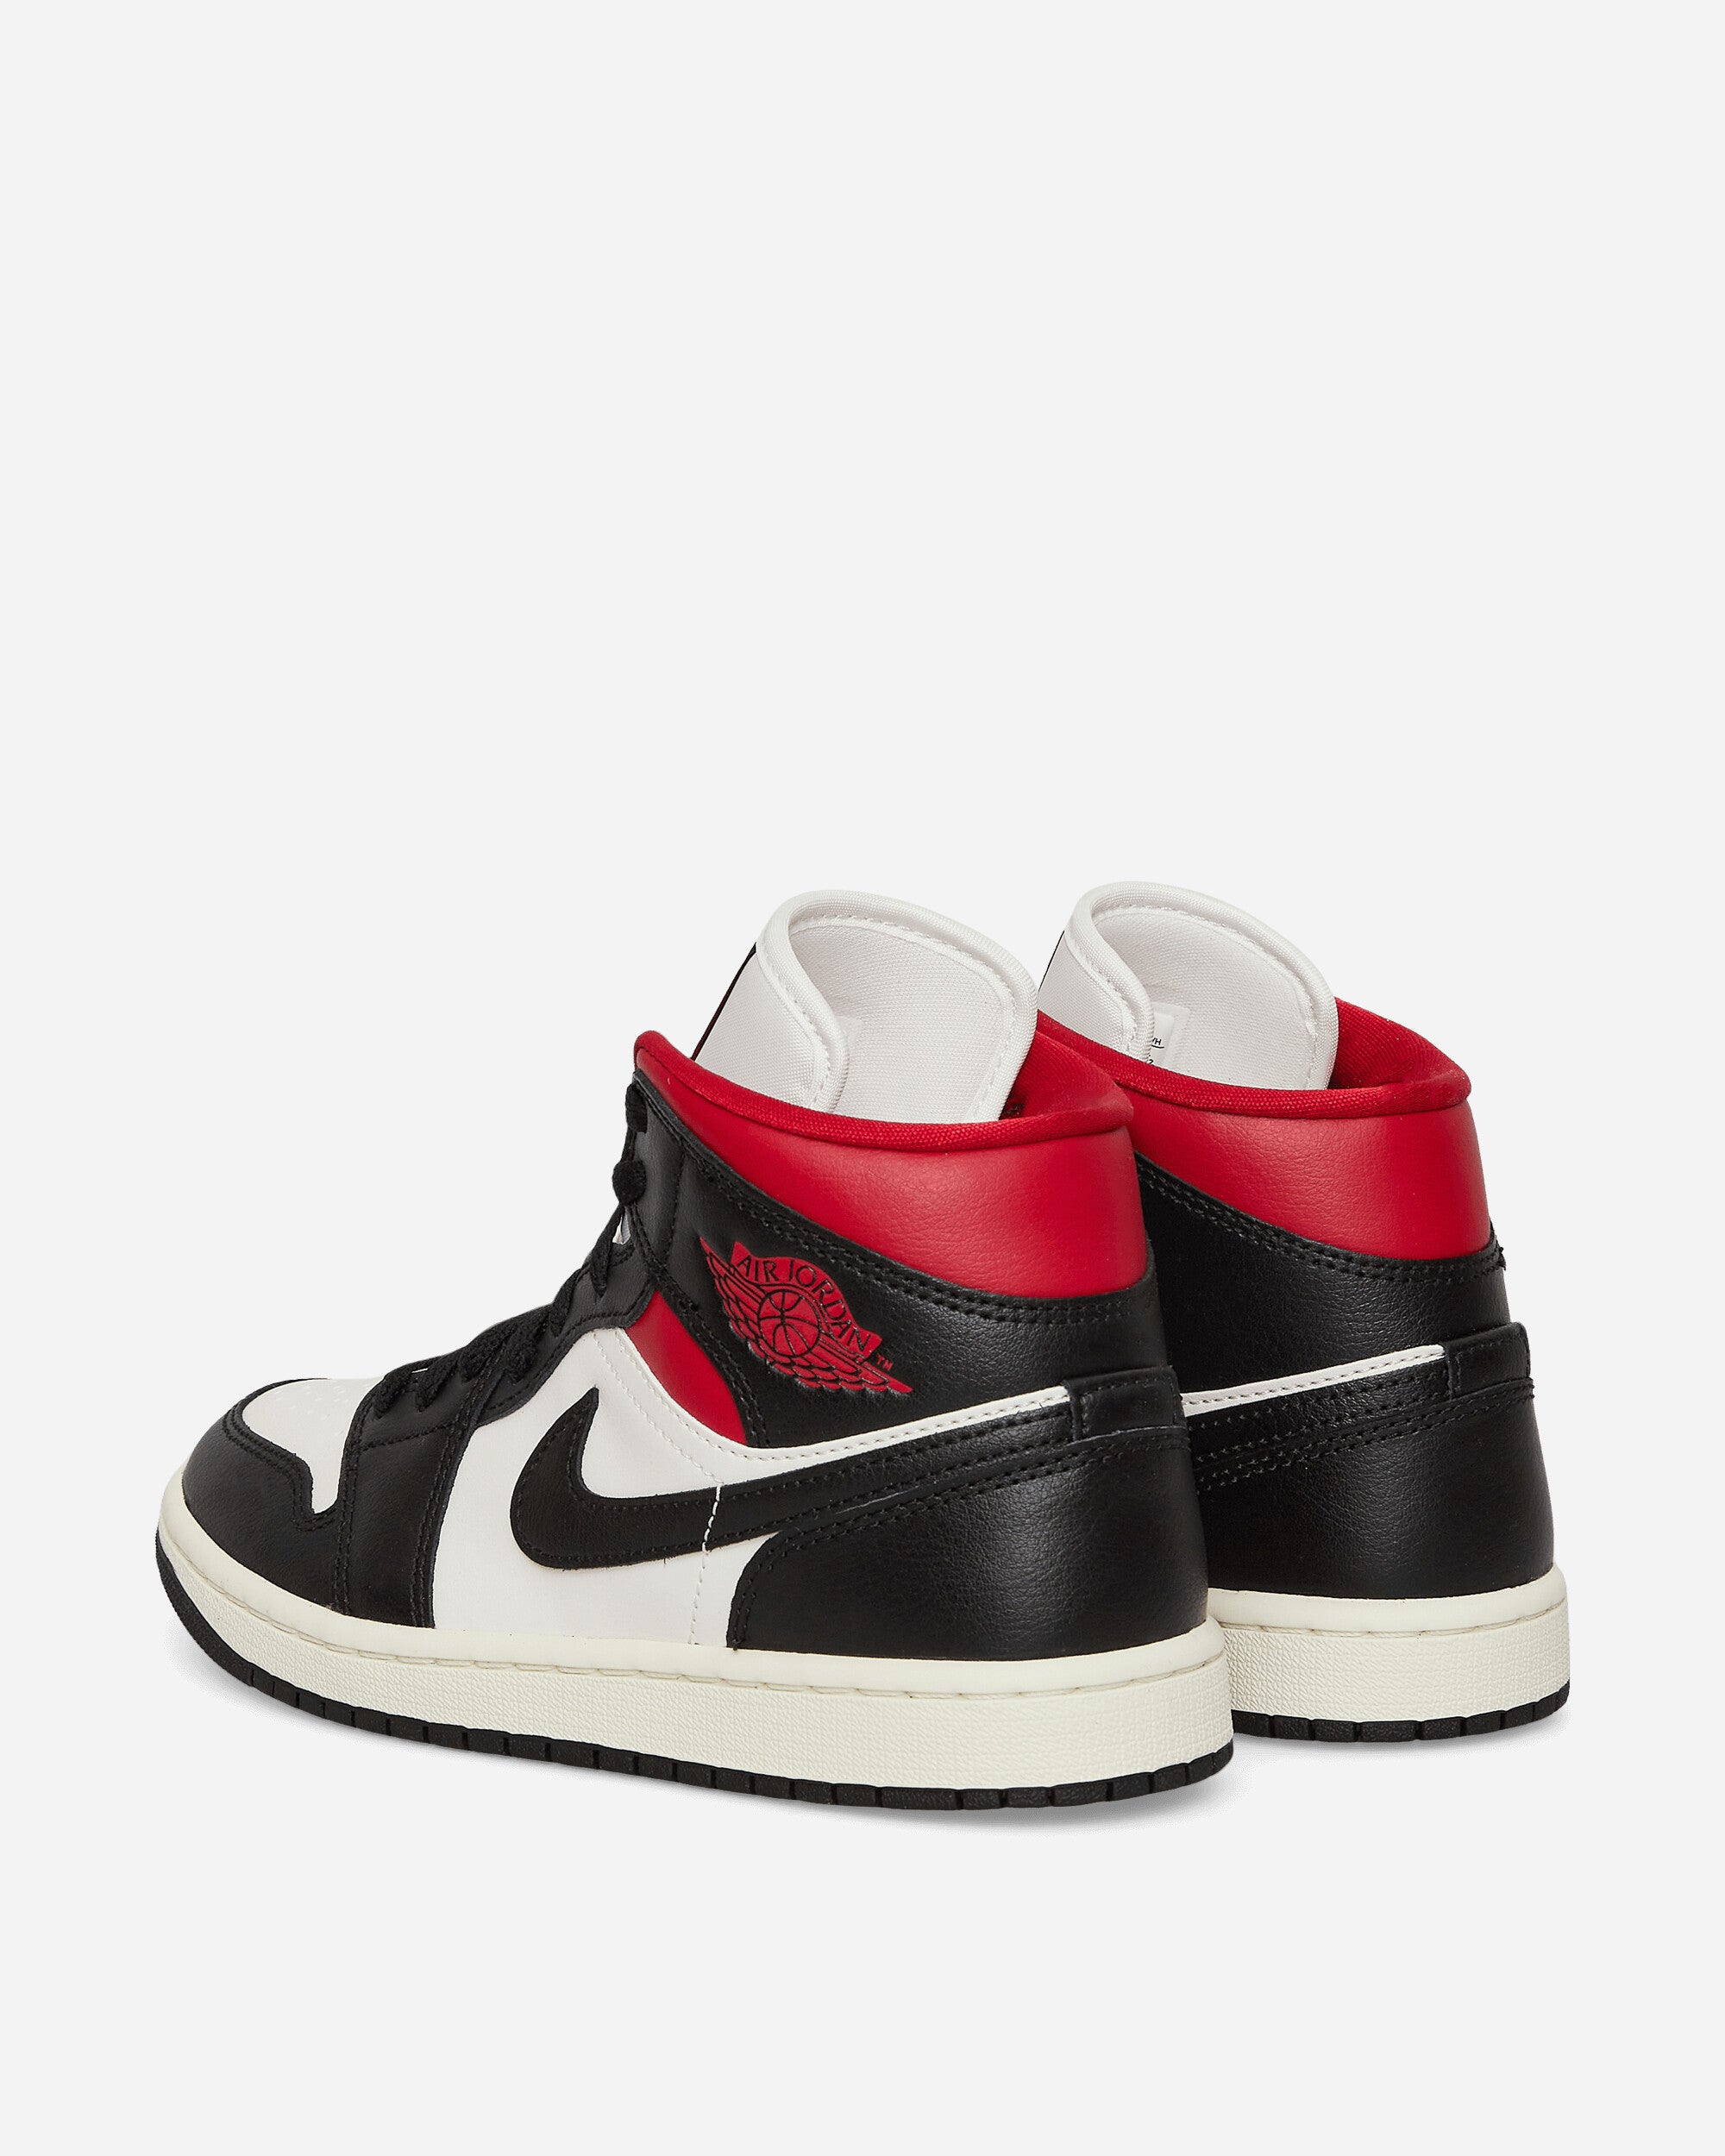 Nike Jordan Wmns Wm Air Jordan 1 Mid Black/Gym Red Sneakers Mid BQ6472-061